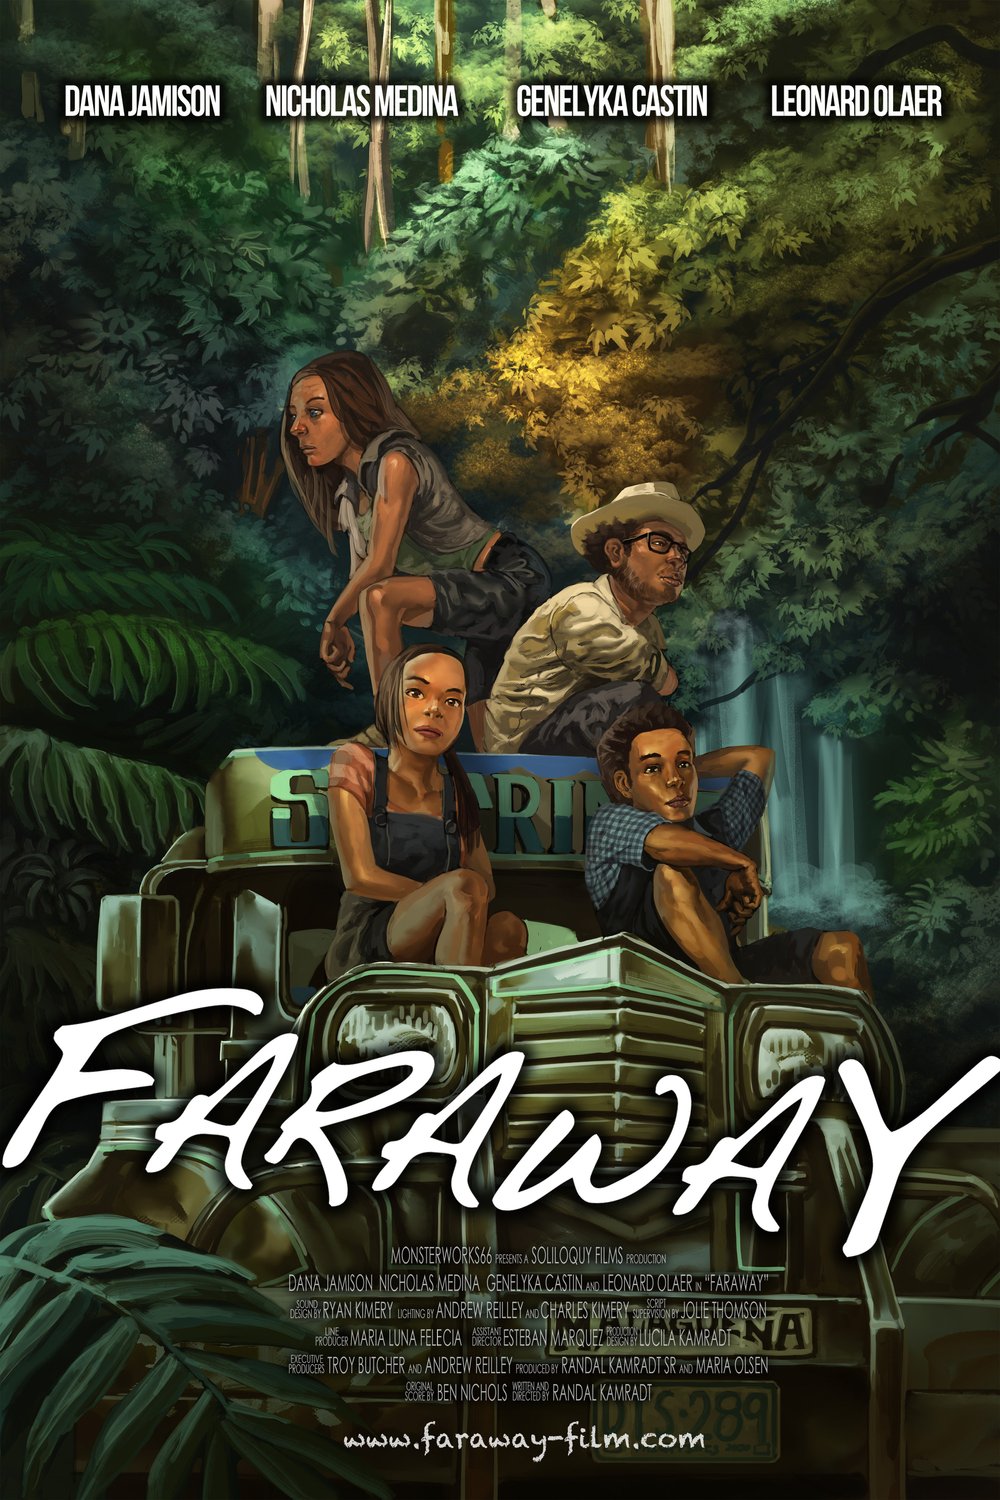 L'affiche du film Faraway